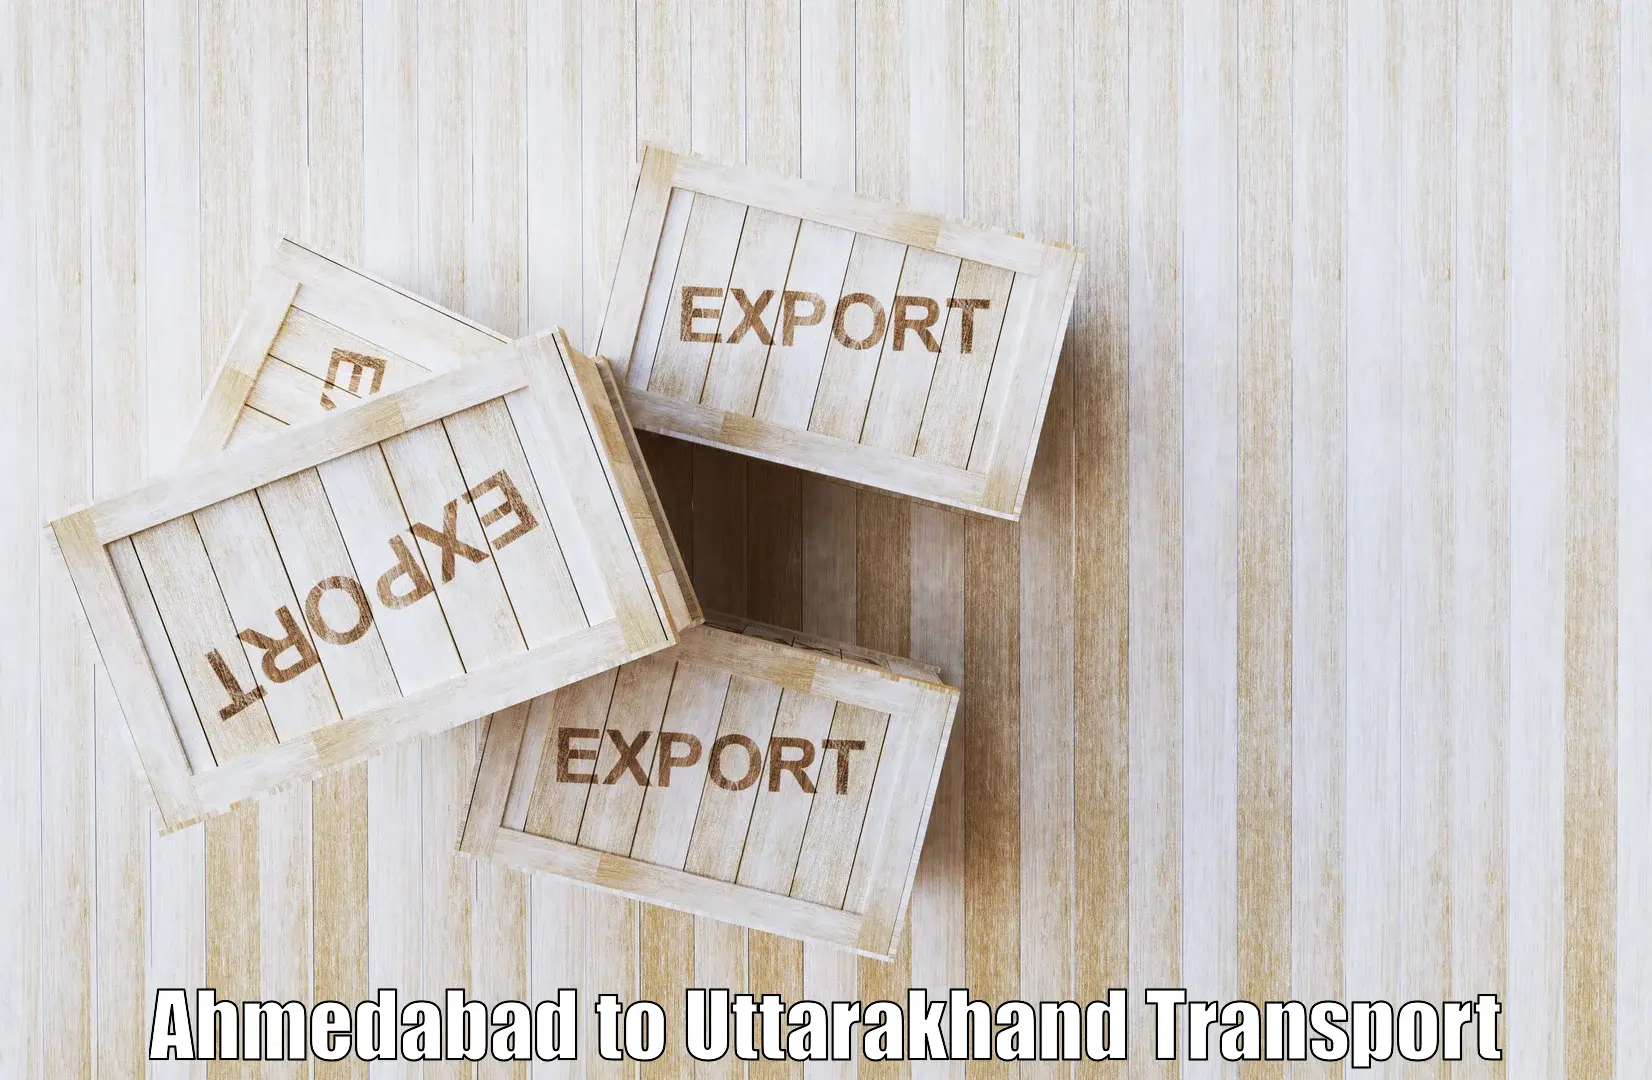 Nearest transport service in Ahmedabad to Uttarakhand